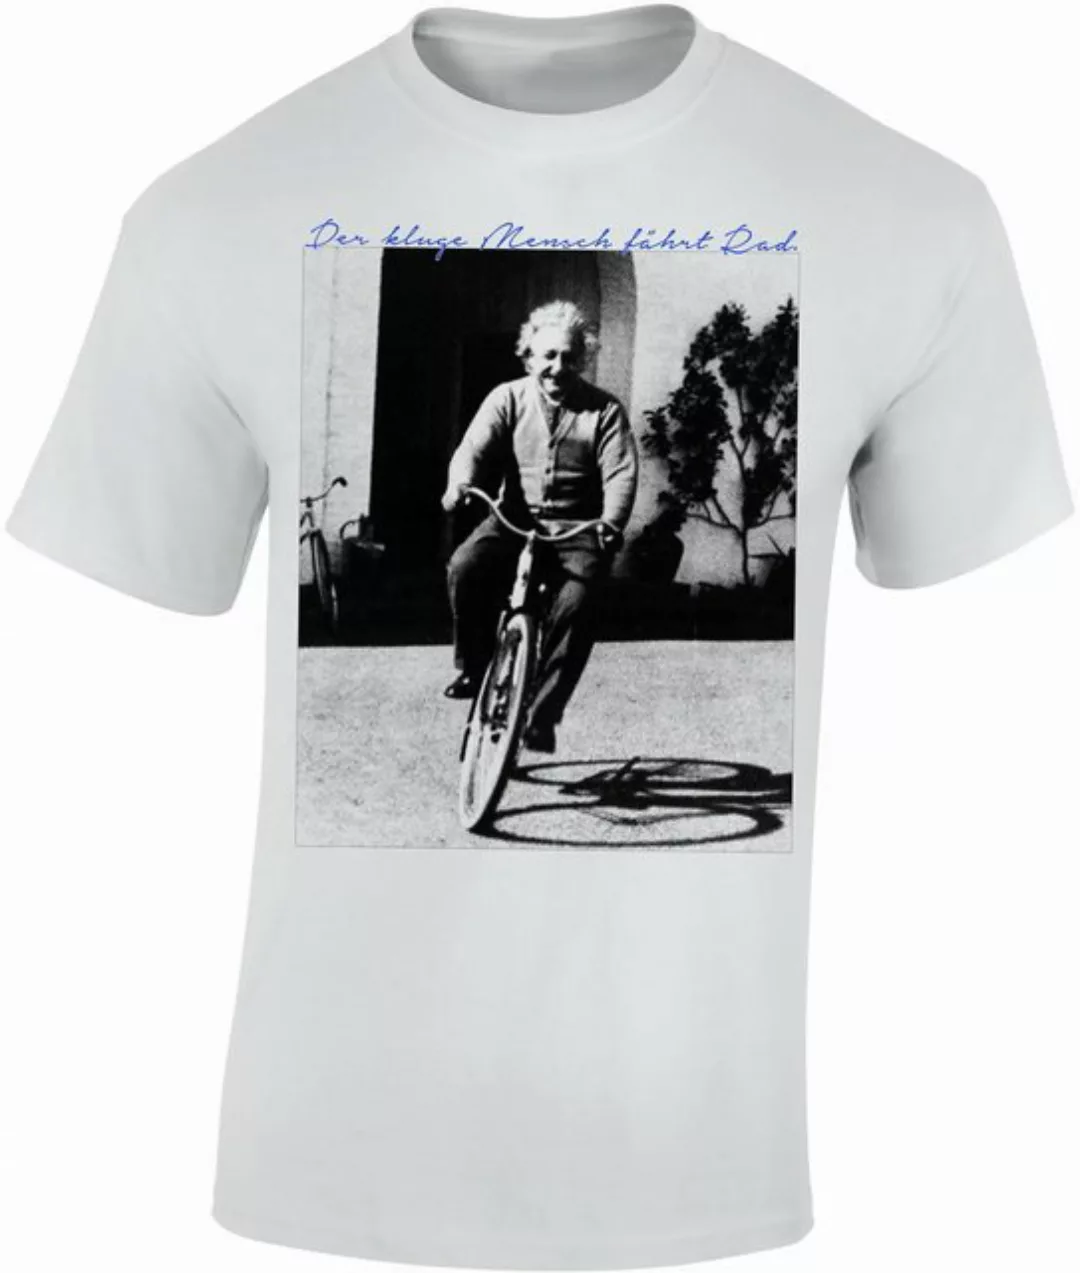 Baddery Print-Shirt Fahrrad T-Shirt : Der kluge Mensch fährt Rad - Sport Ts günstig online kaufen